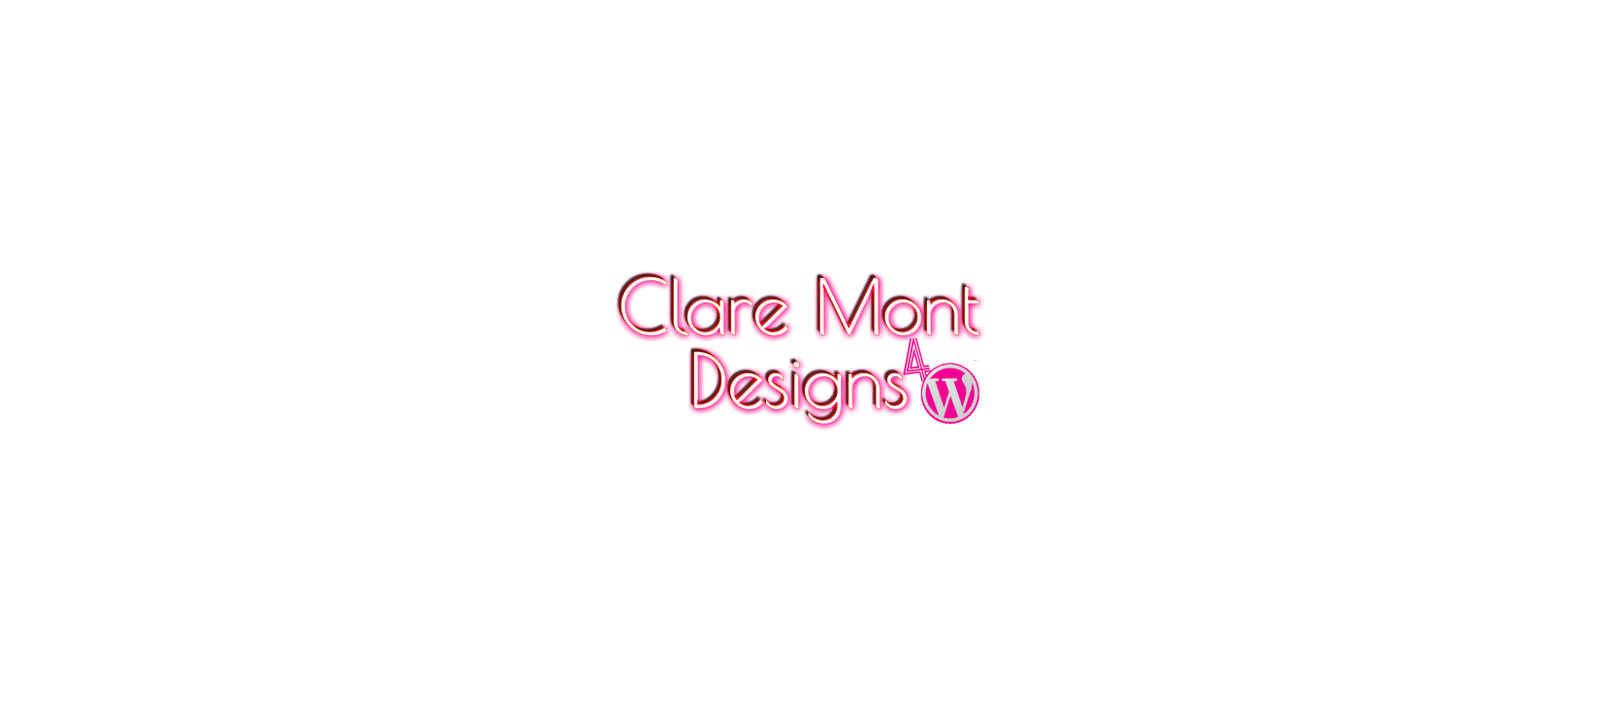 Clare Mont Designs